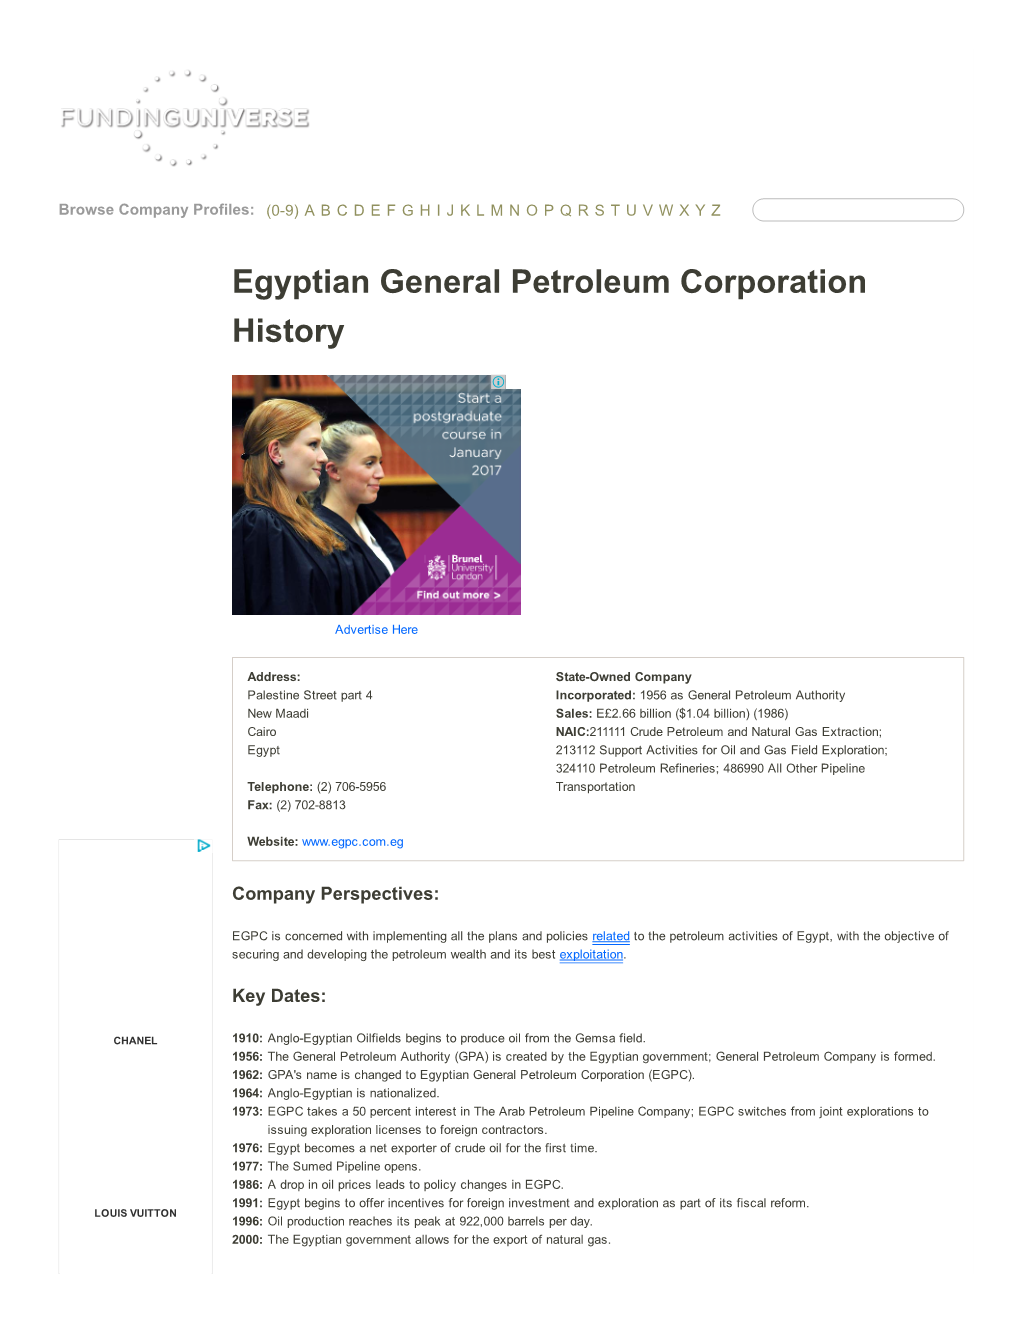 Egyptian General Petroleum Corporation History